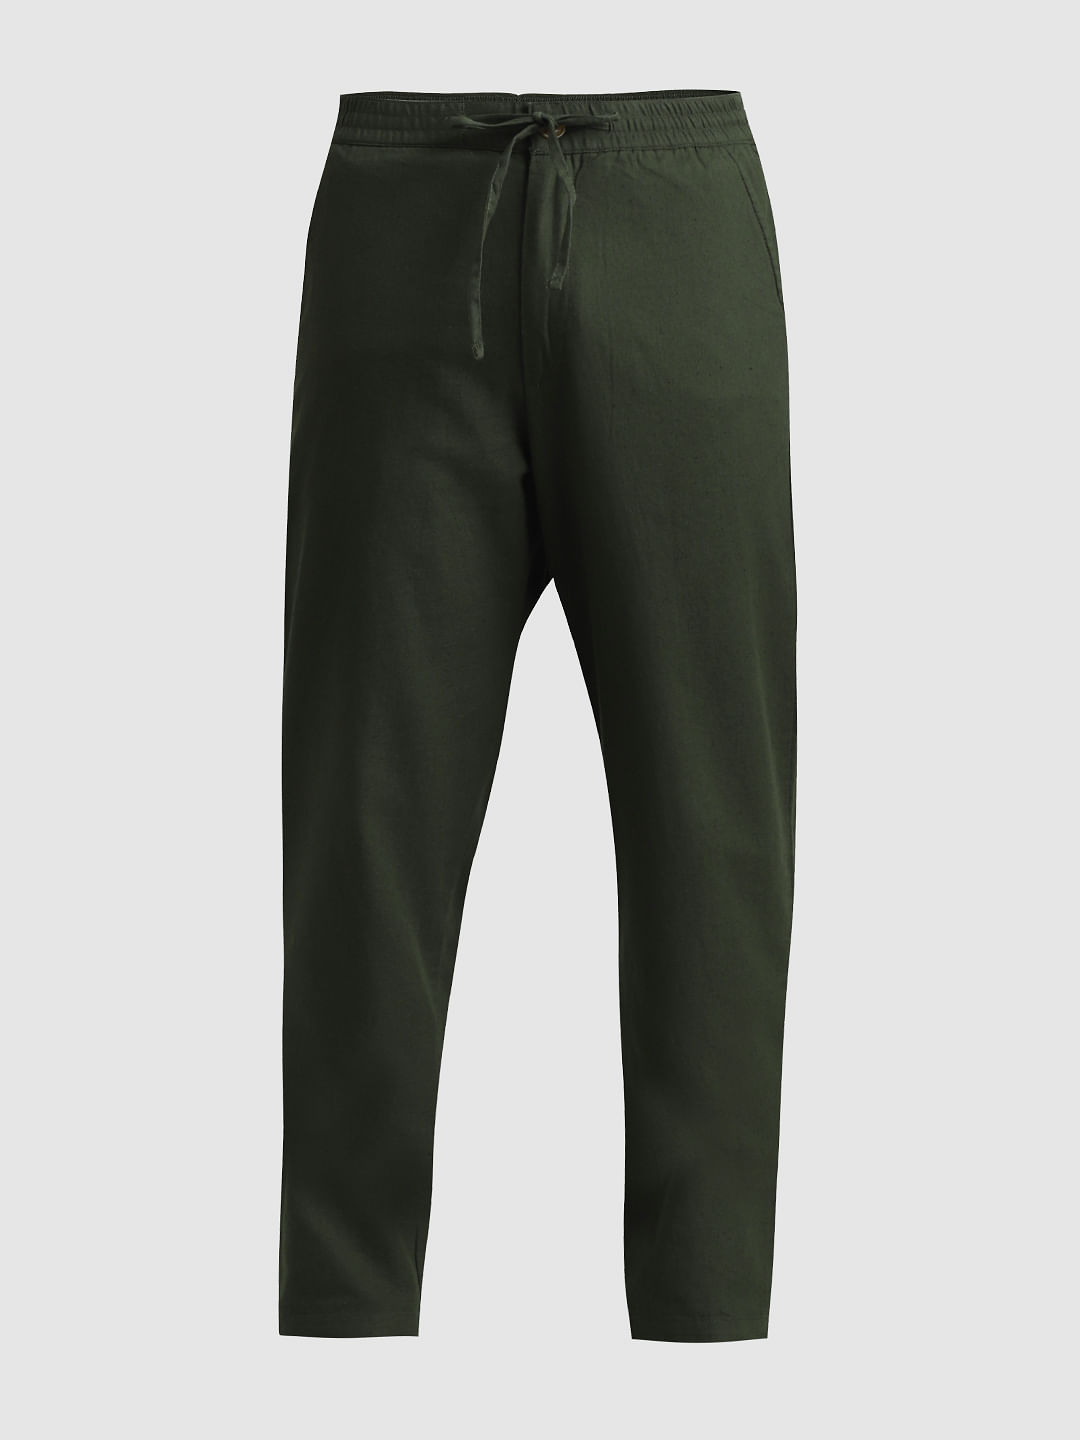 Cotton Kurta Set With Pants Striped Design Pattern, Dark Green – Anushil